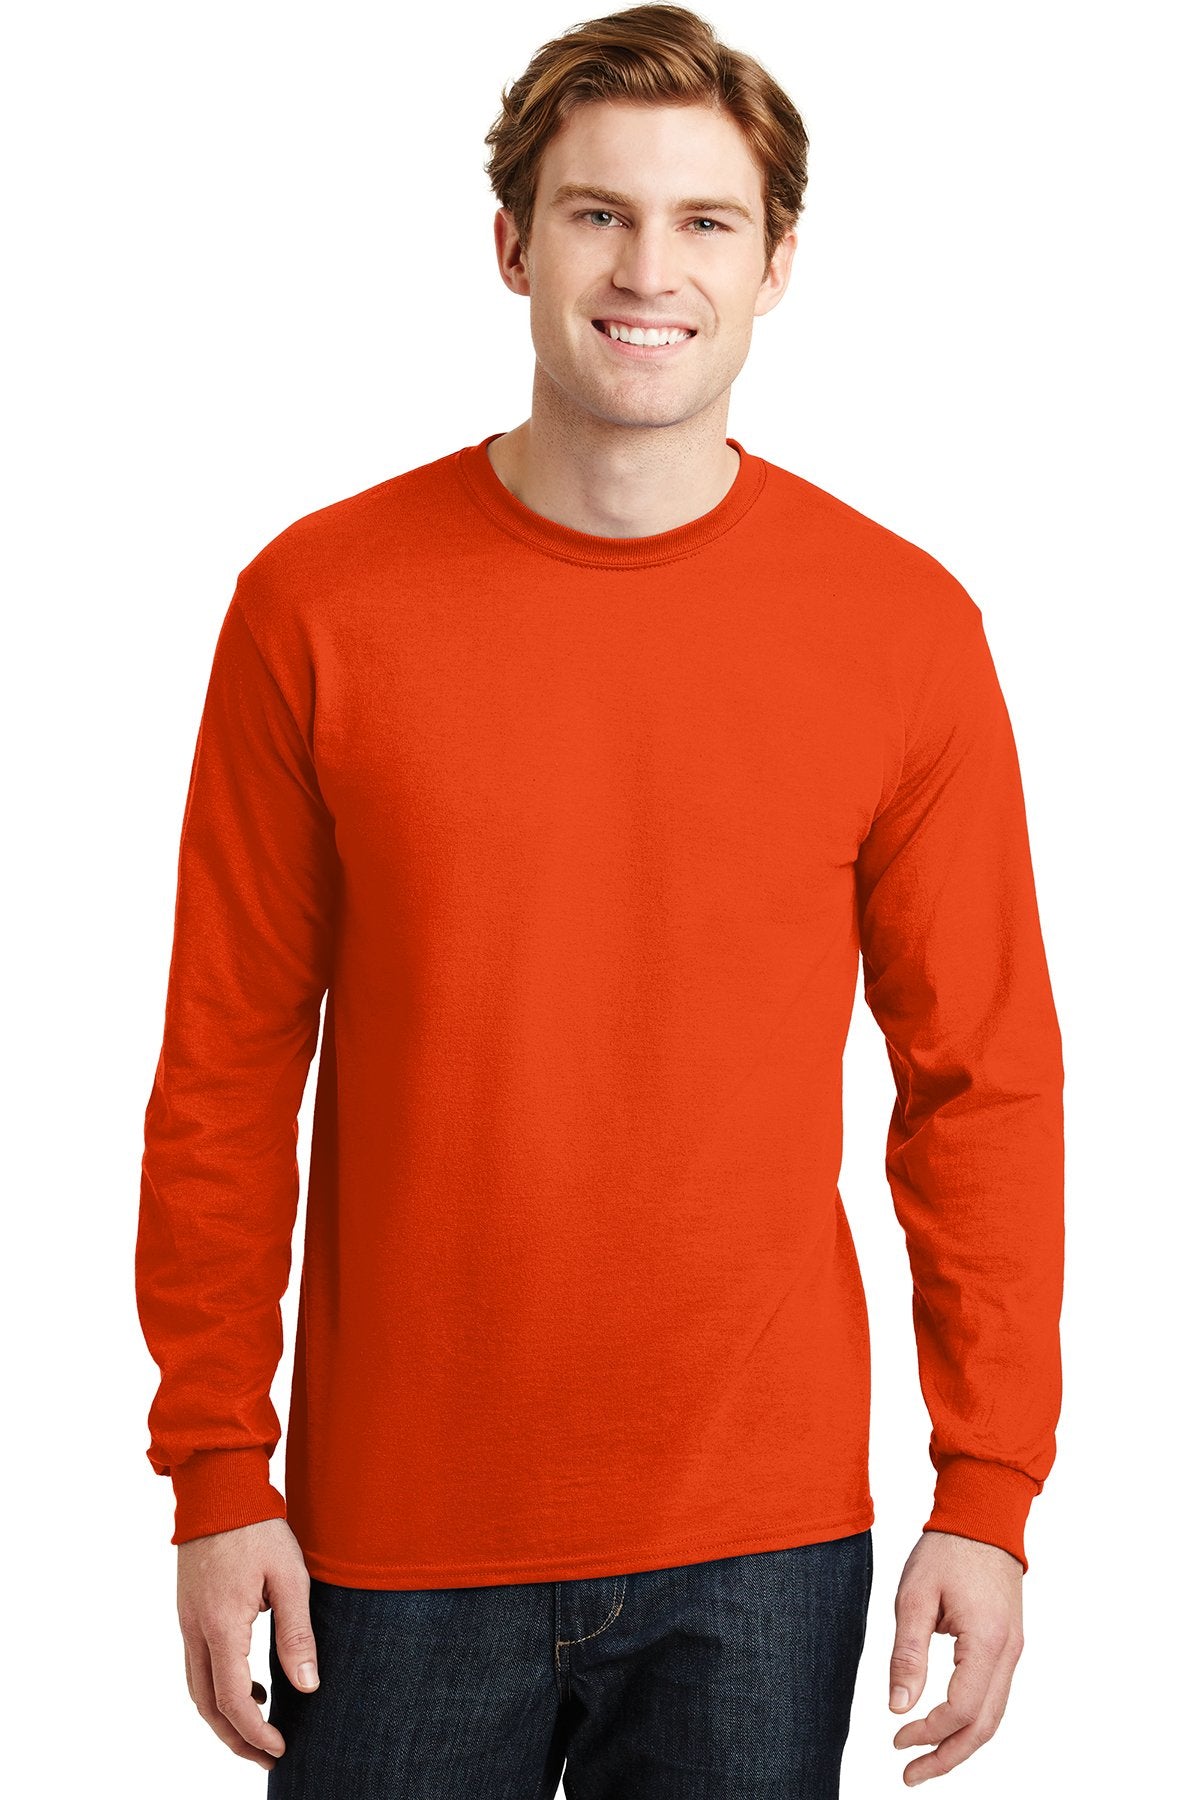 Gildan Dryblend Cotton Poly Long Sleeve T Shirt in Orange, add a custom ...